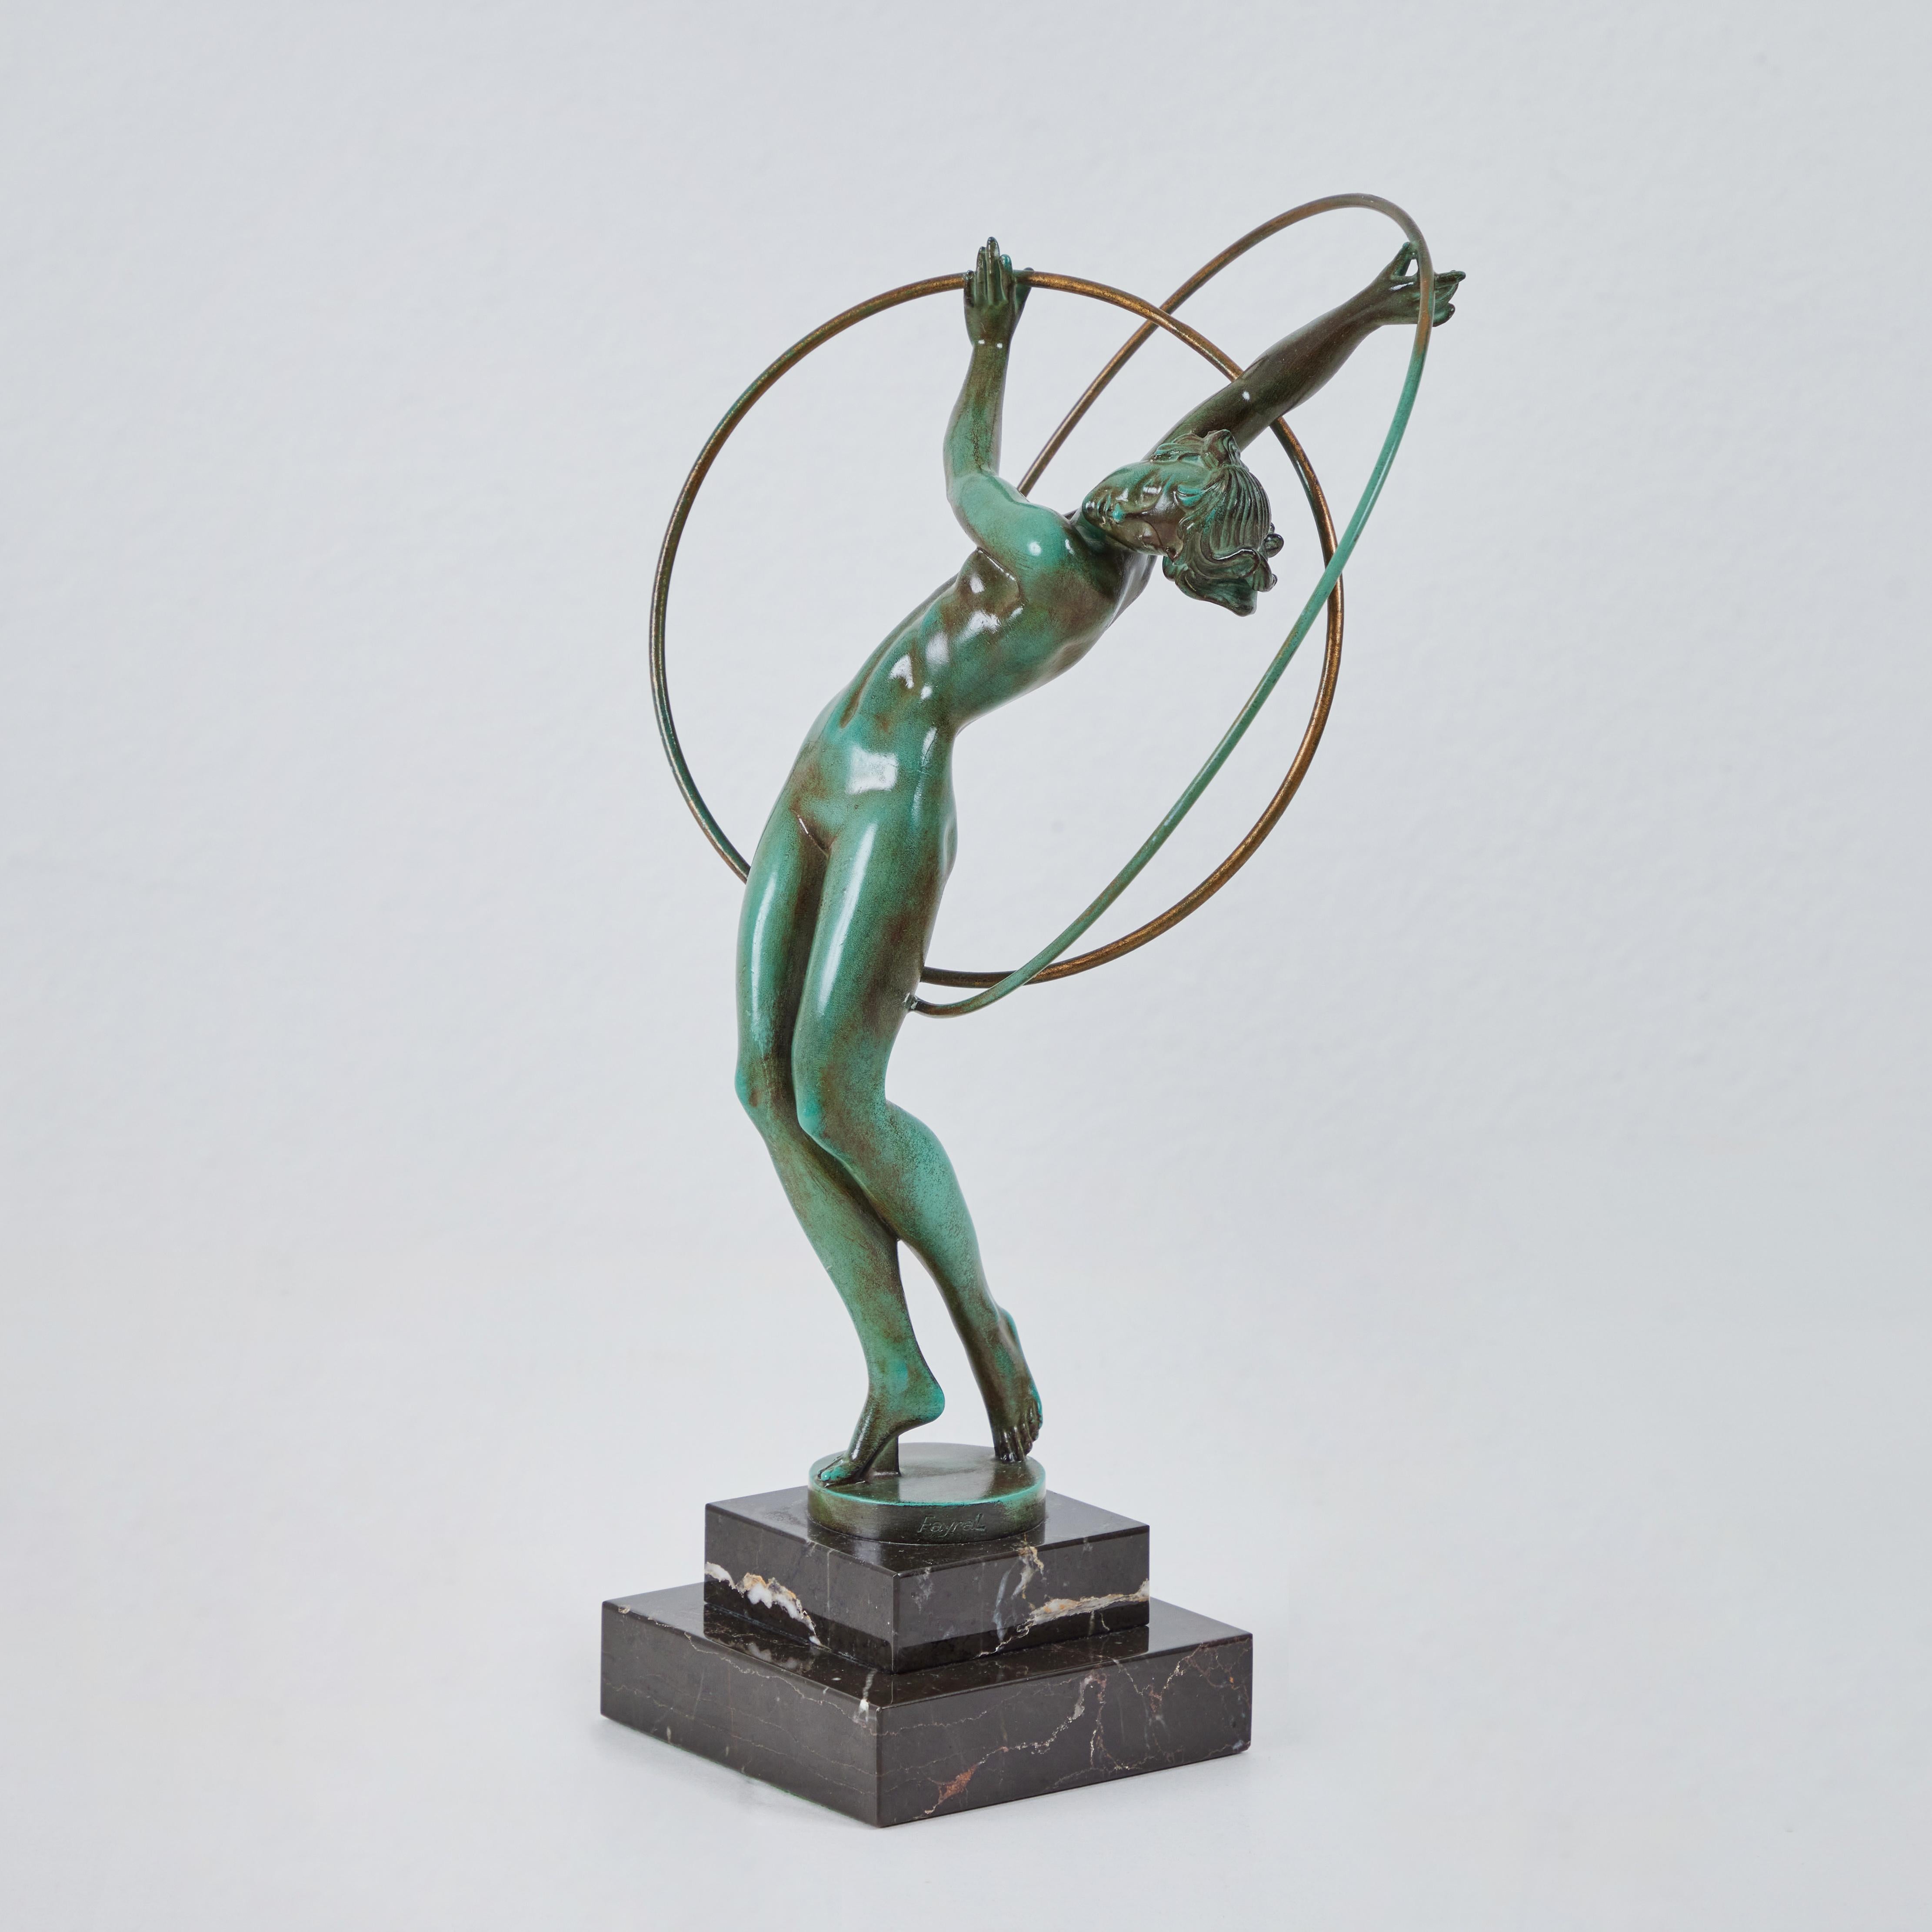 French Art Deco Hoop Dancer - Pierre Le Faguays,  1930s France